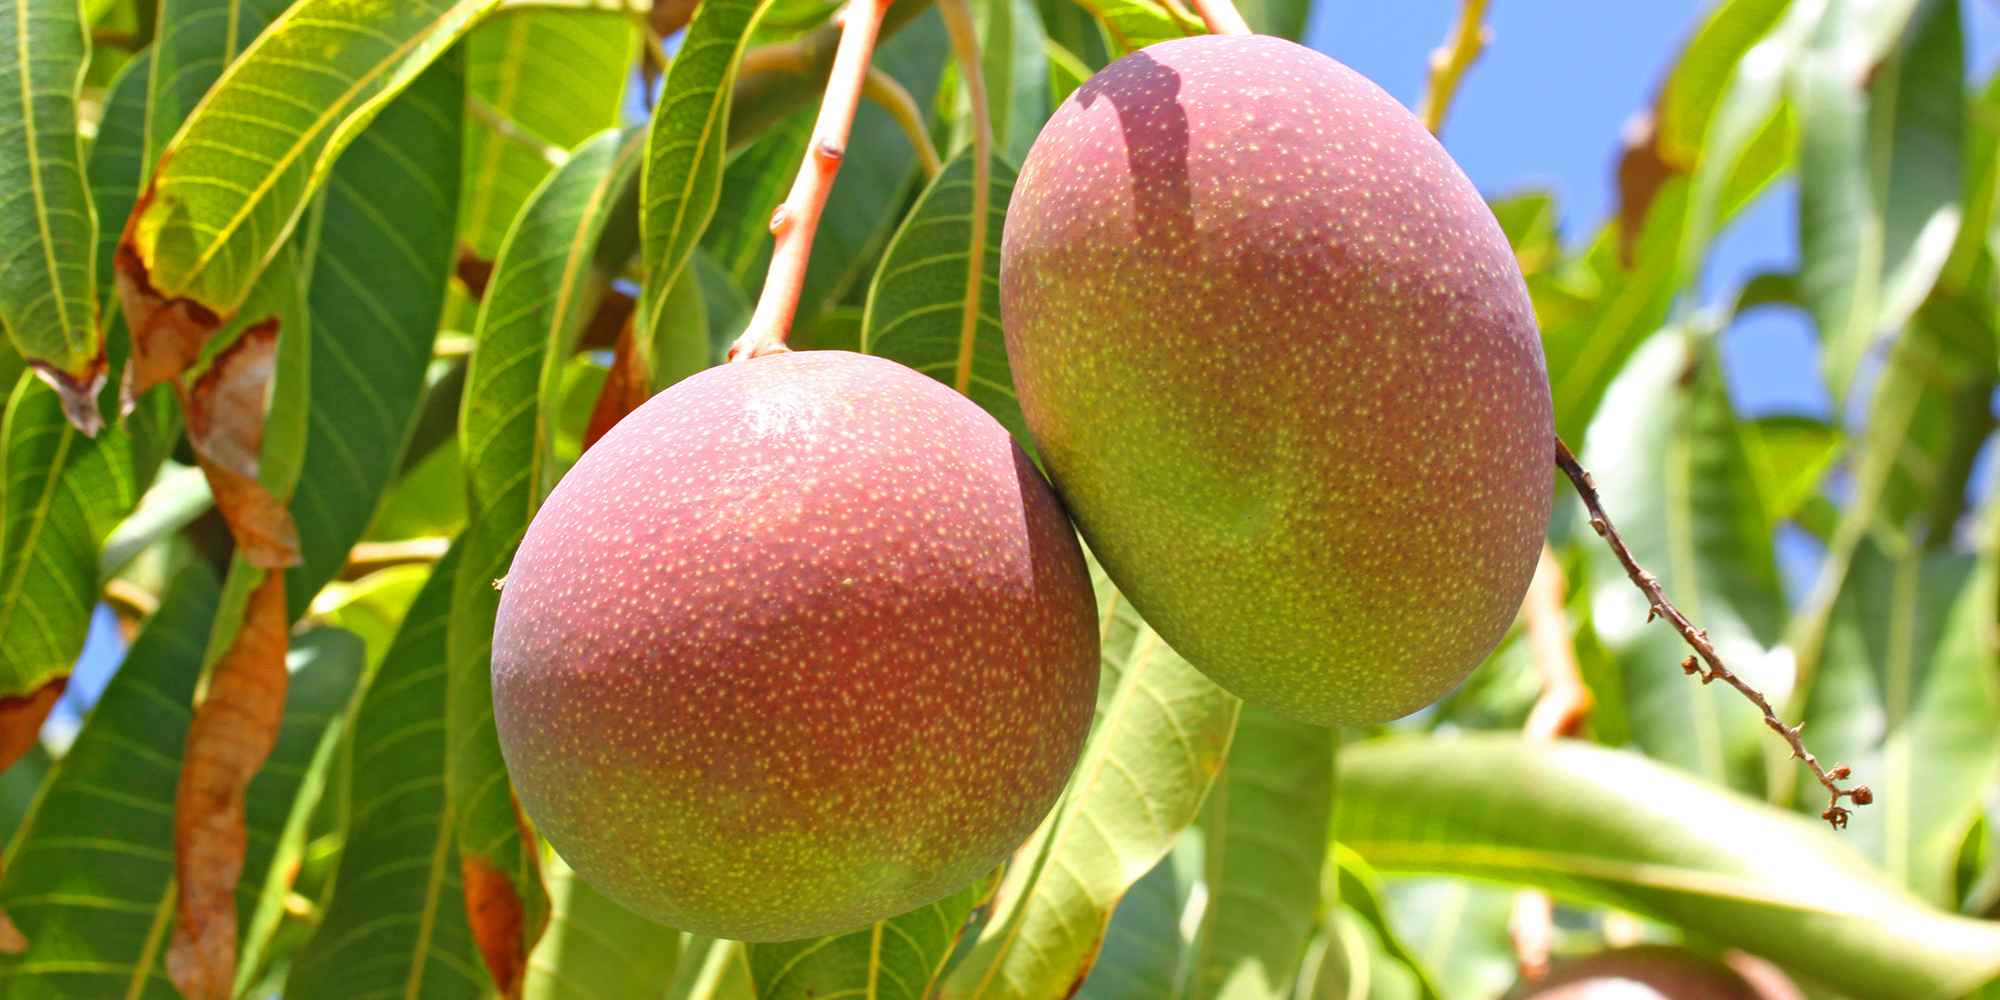  Kenyan Fruits Exporter